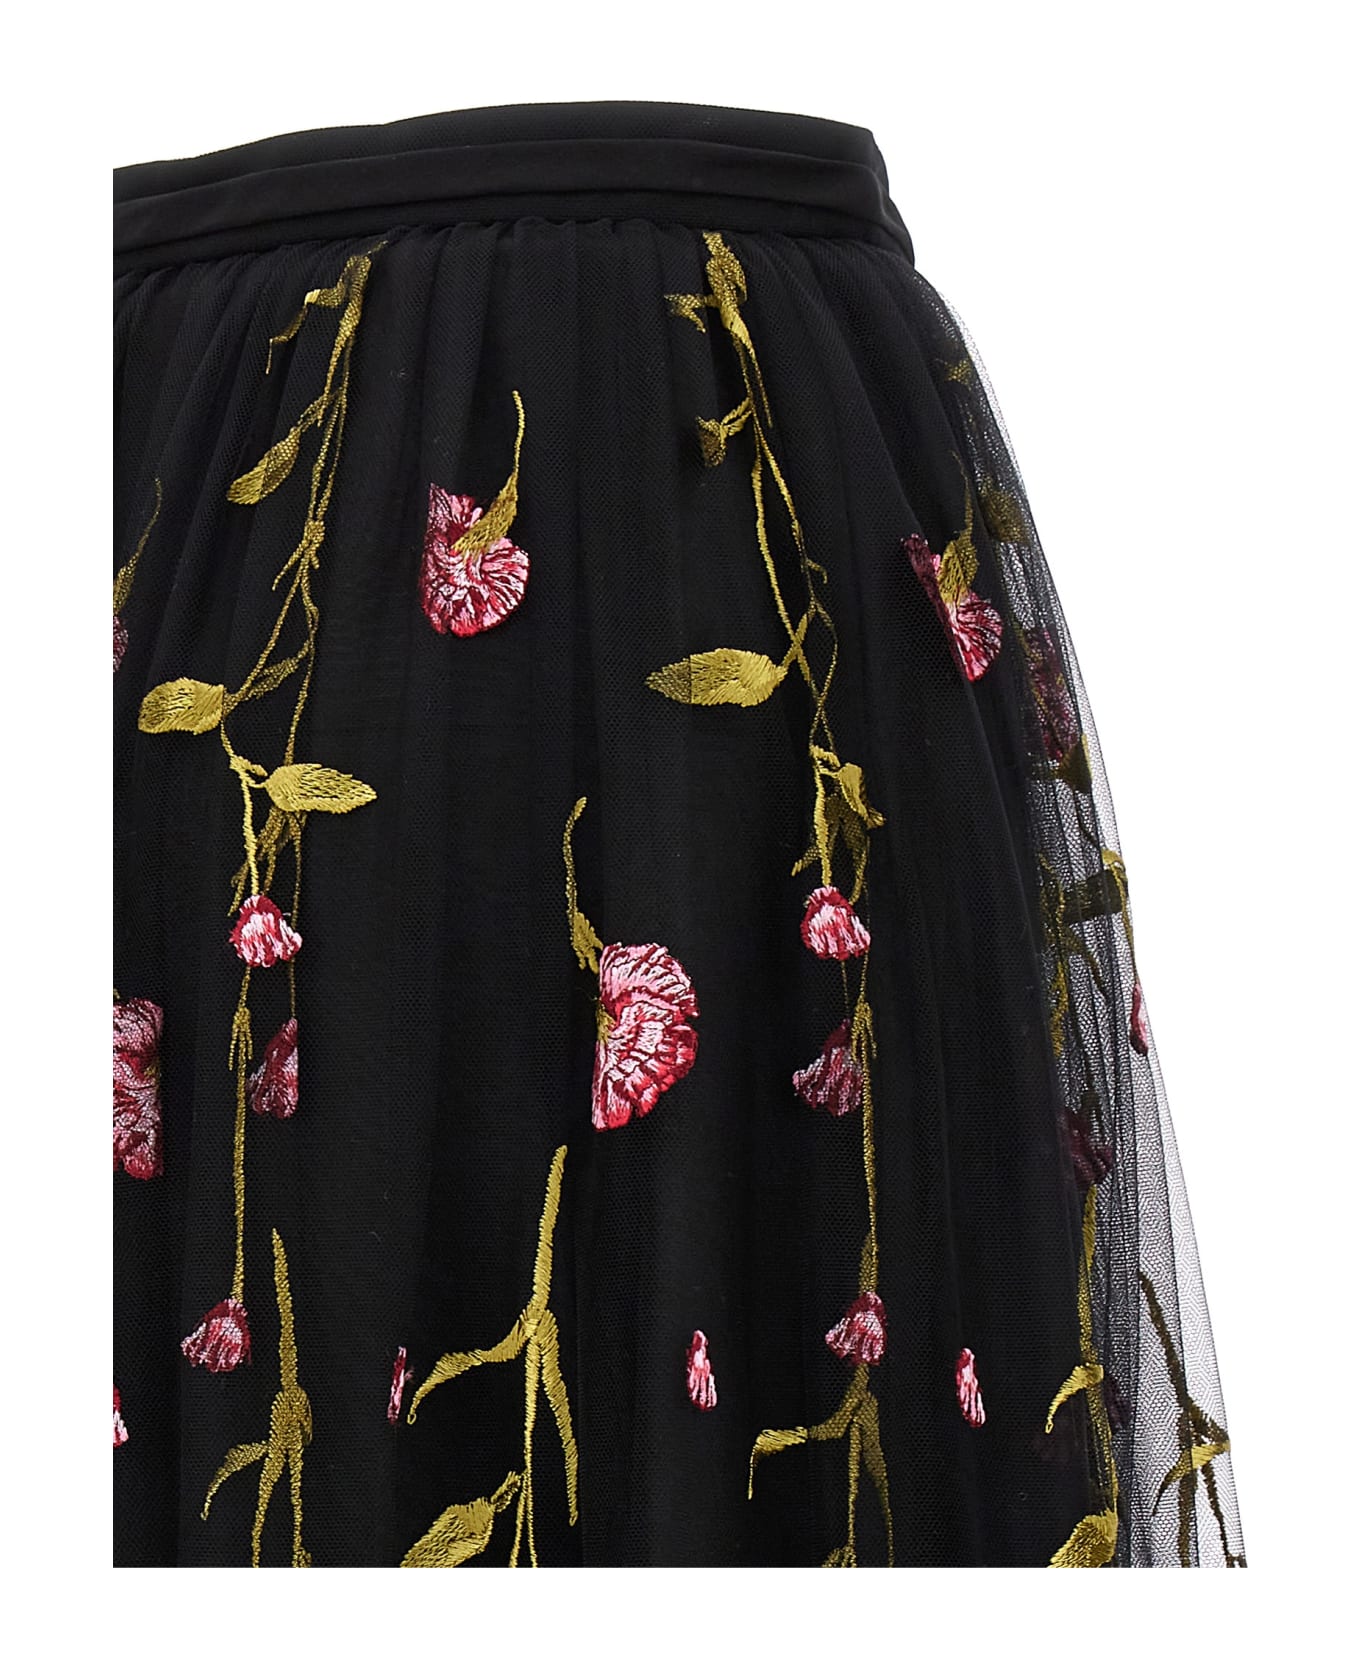 Giambattista Valli Floral Embroidery Skirt - Multicolor